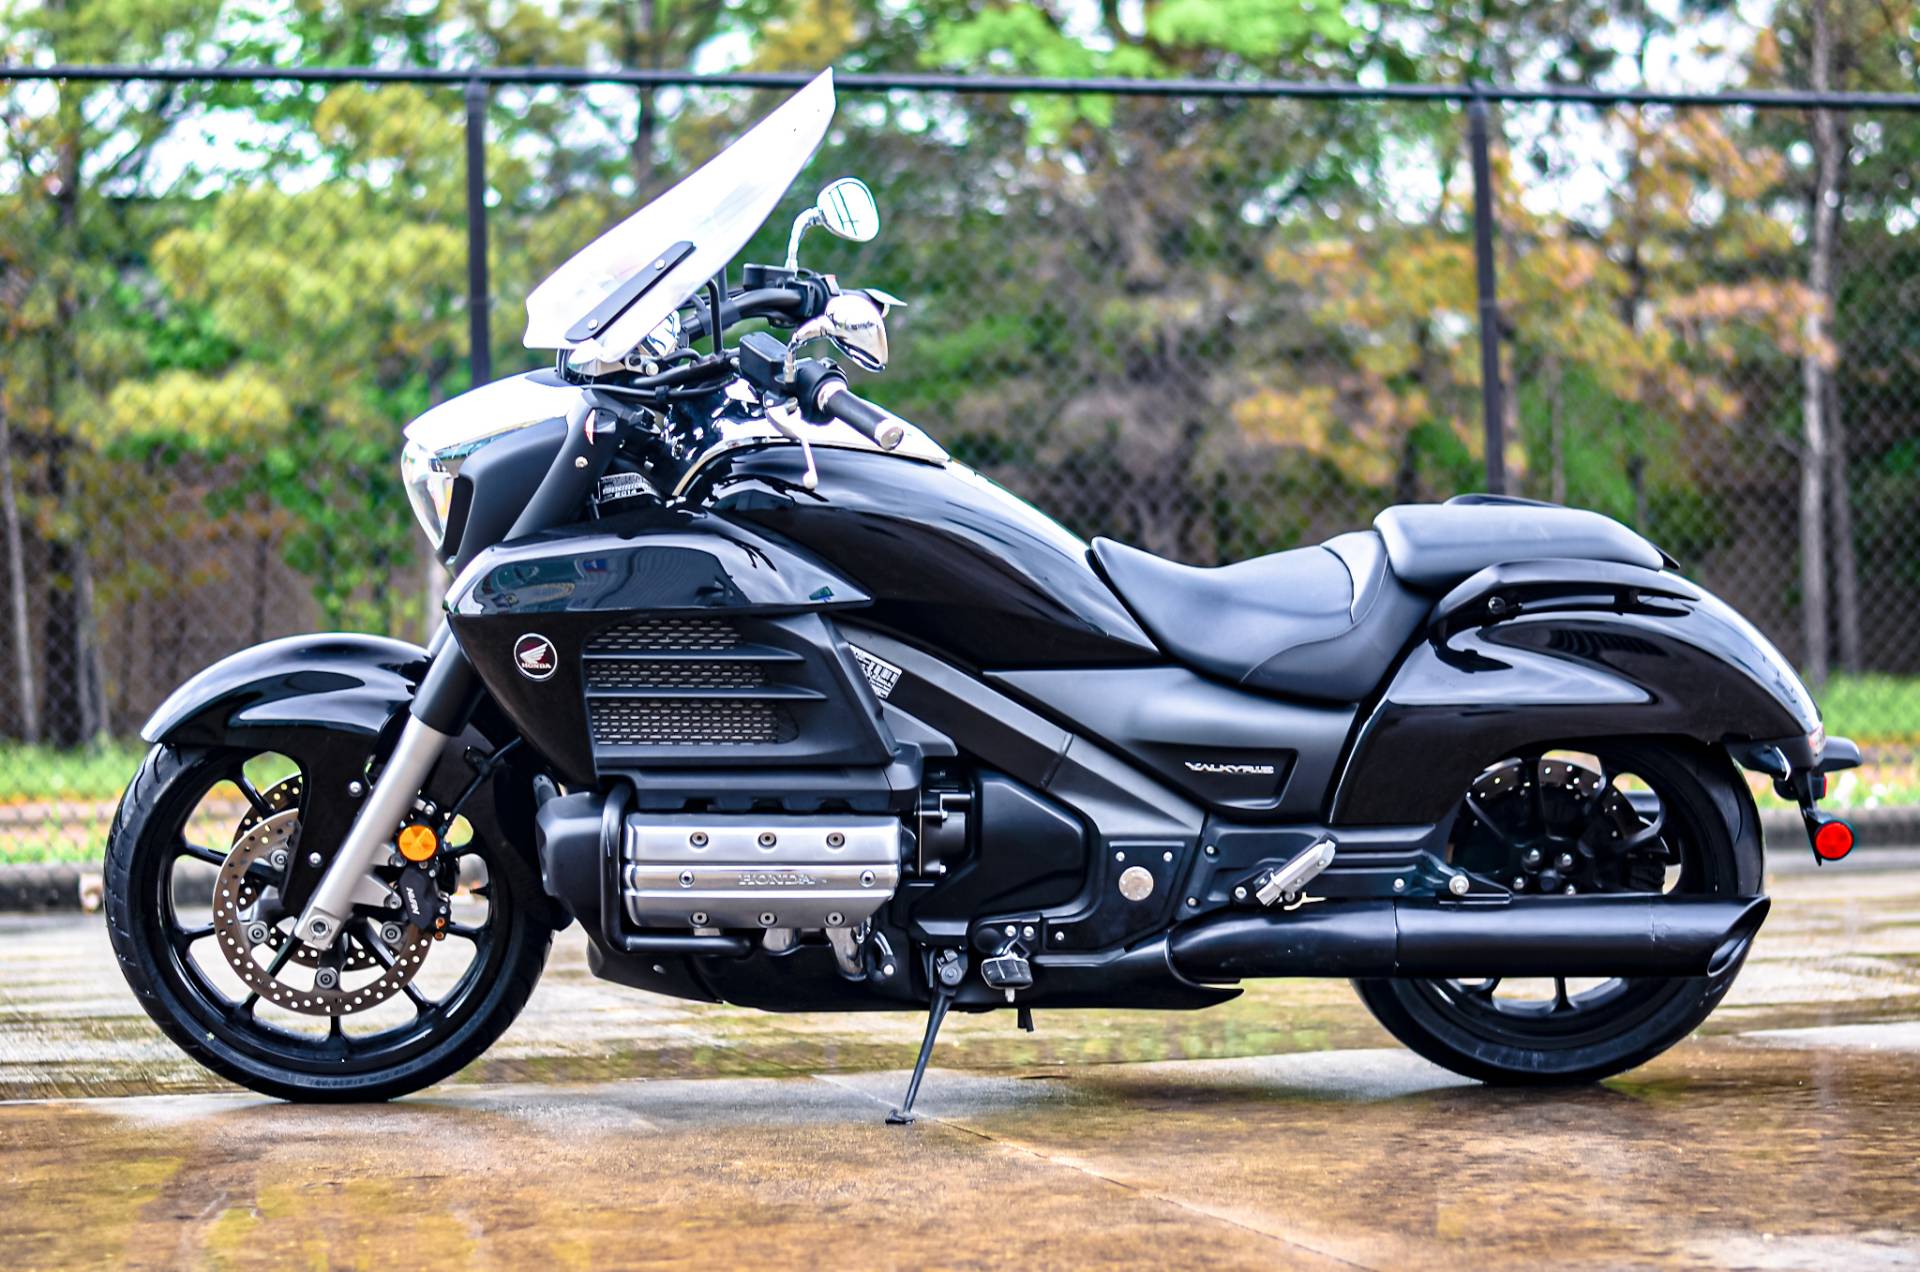 Used 2014 Honda Gl1800c Valkyrie Motorcycles In Houston Tx Stock Number N000918